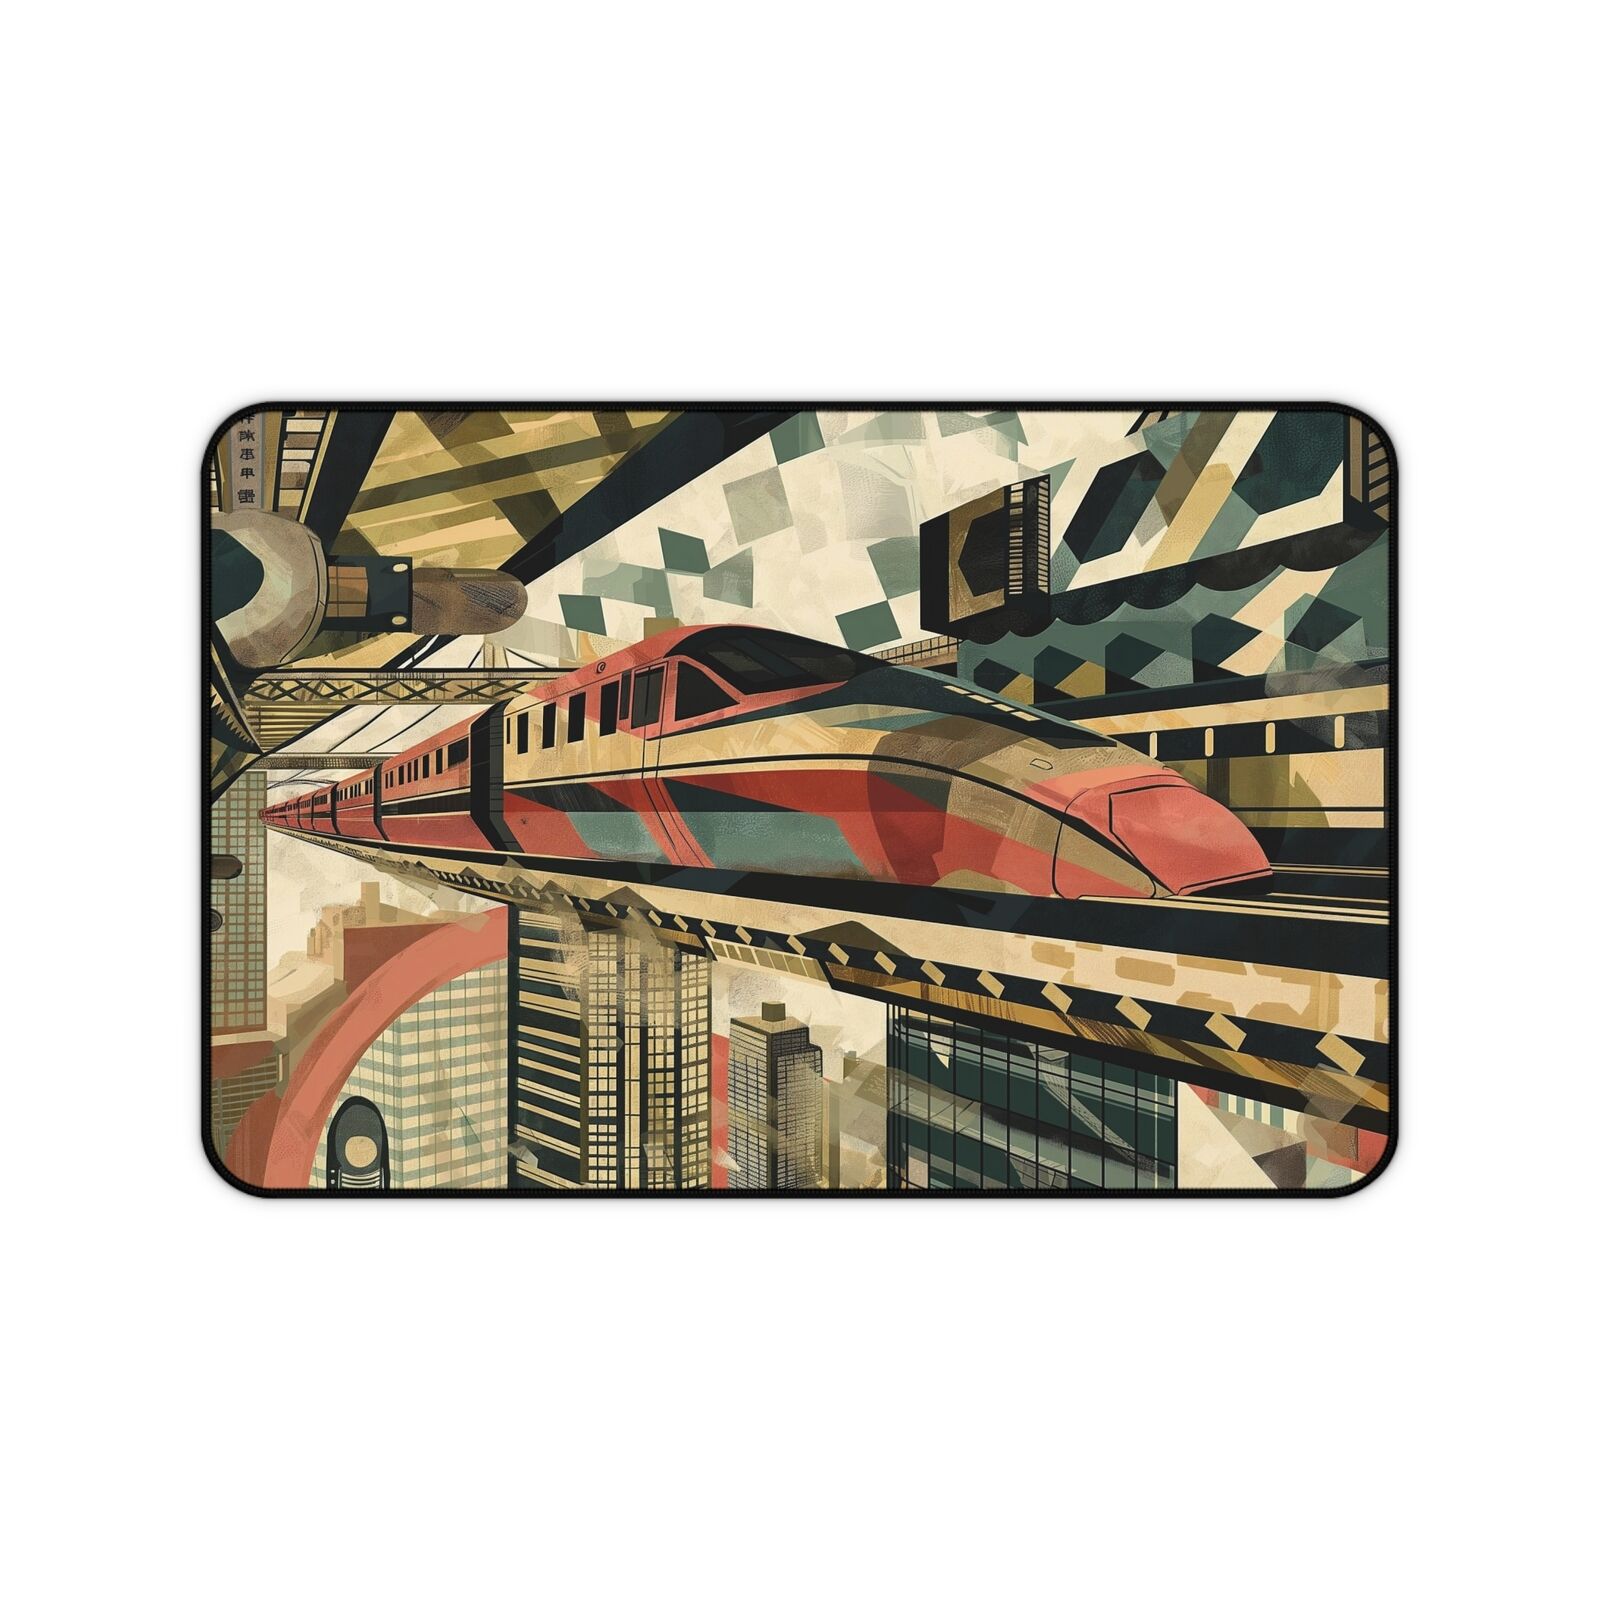 Express Train Through Geometric City XL Mouse Pad Desk Mat – 3 Sizes